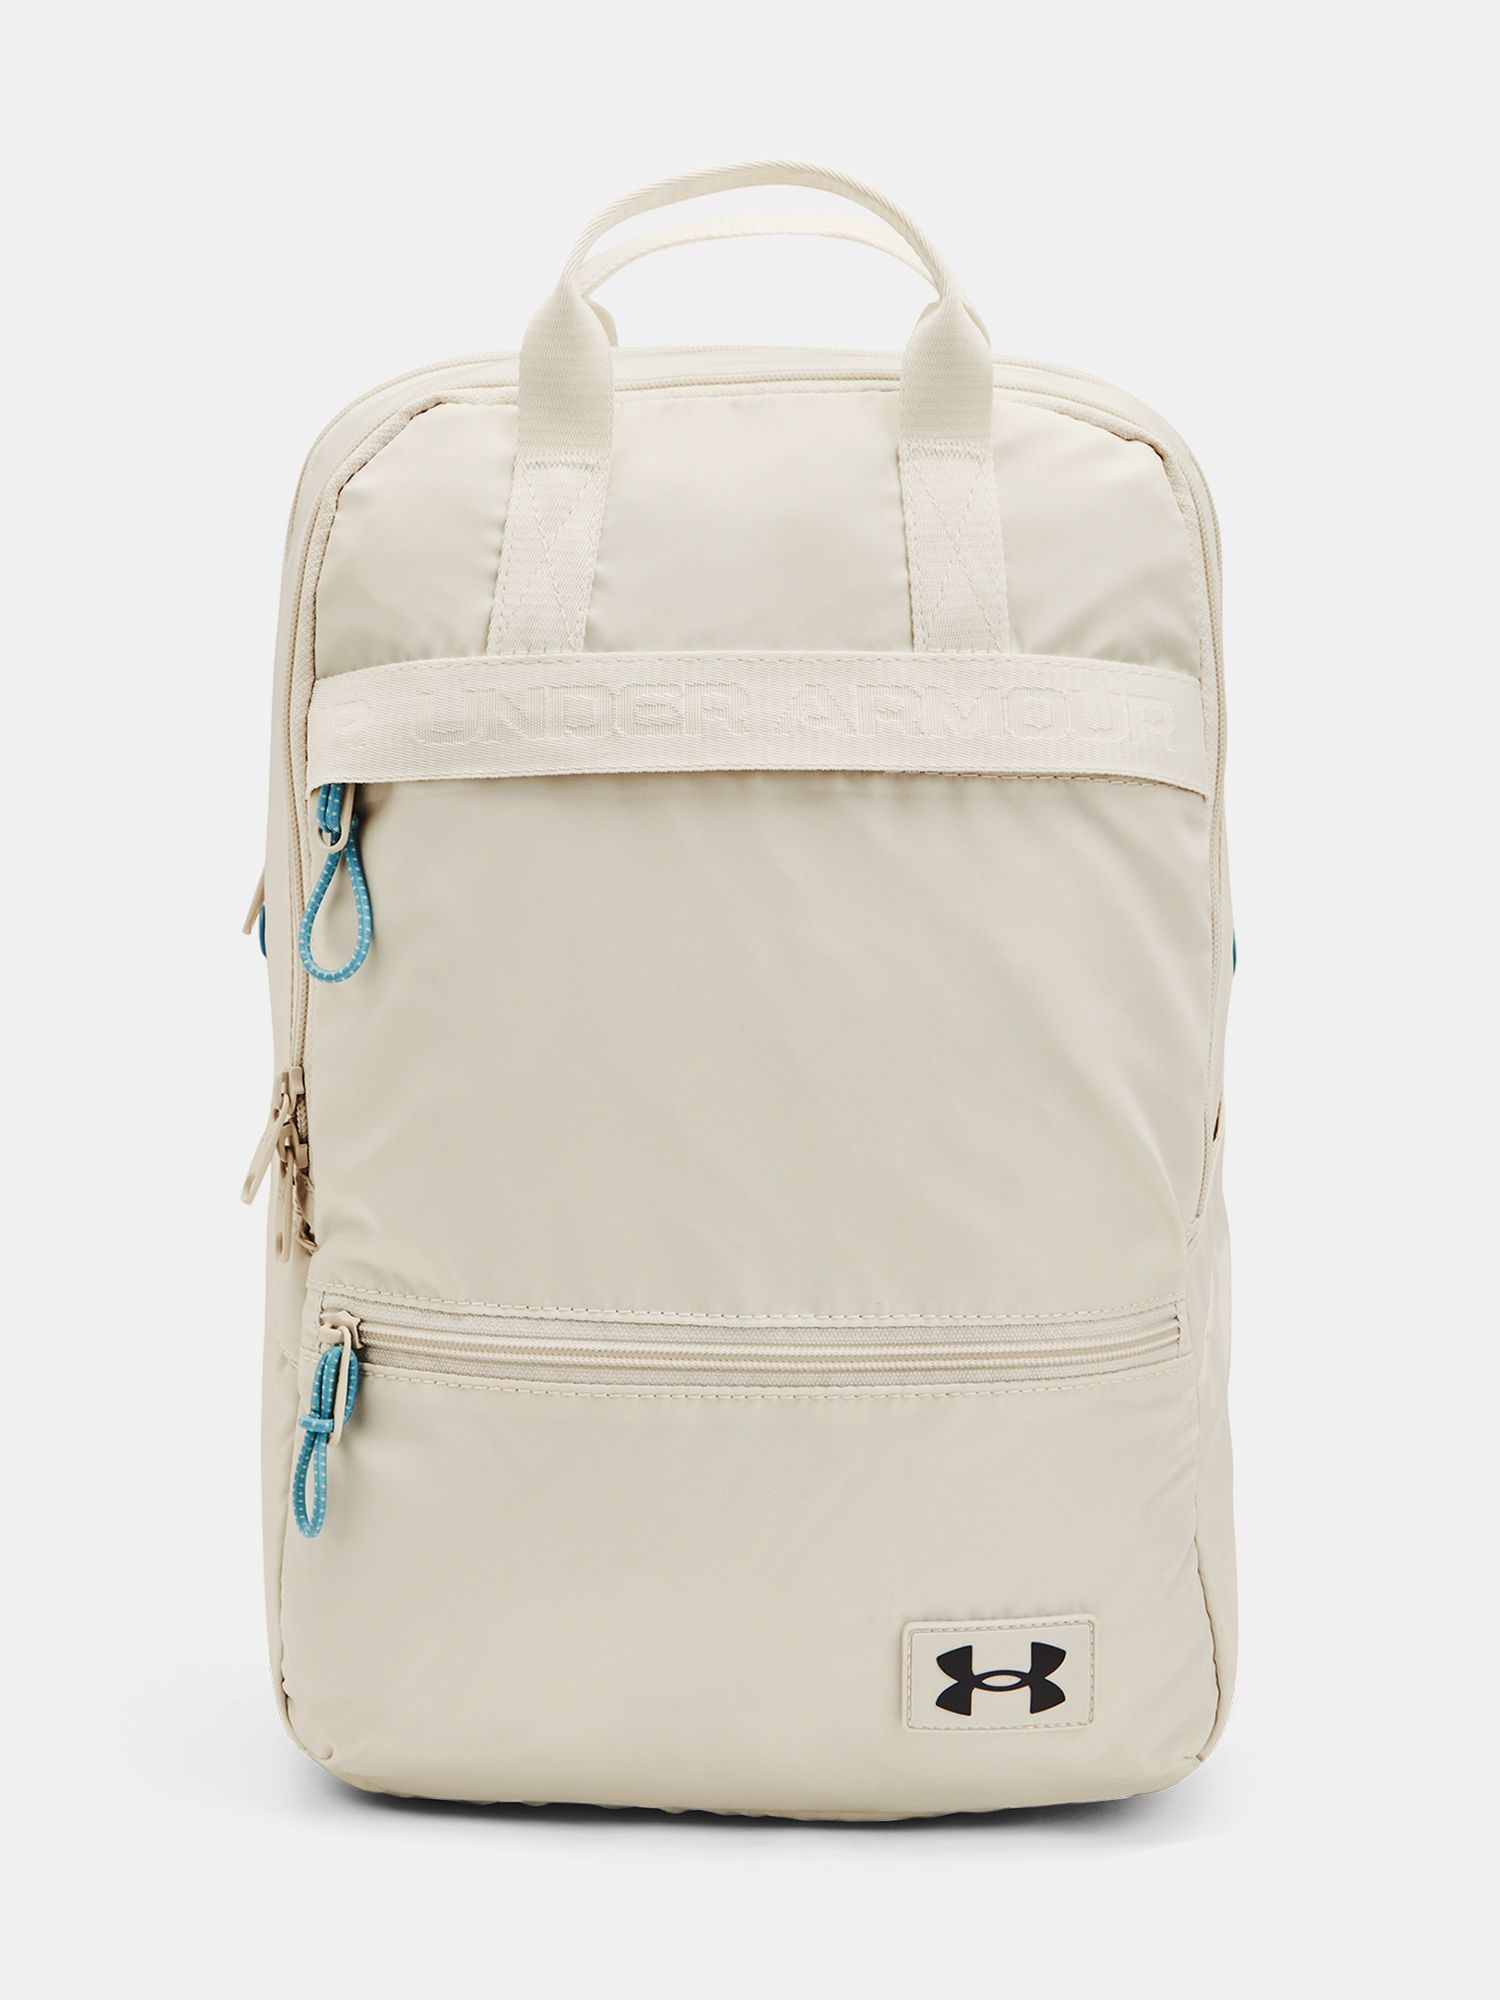  Essentials Backpack, black - women's backpack - UNDER ARMOUR  - 55.44 € - outdoorové oblečení a vybavení shop